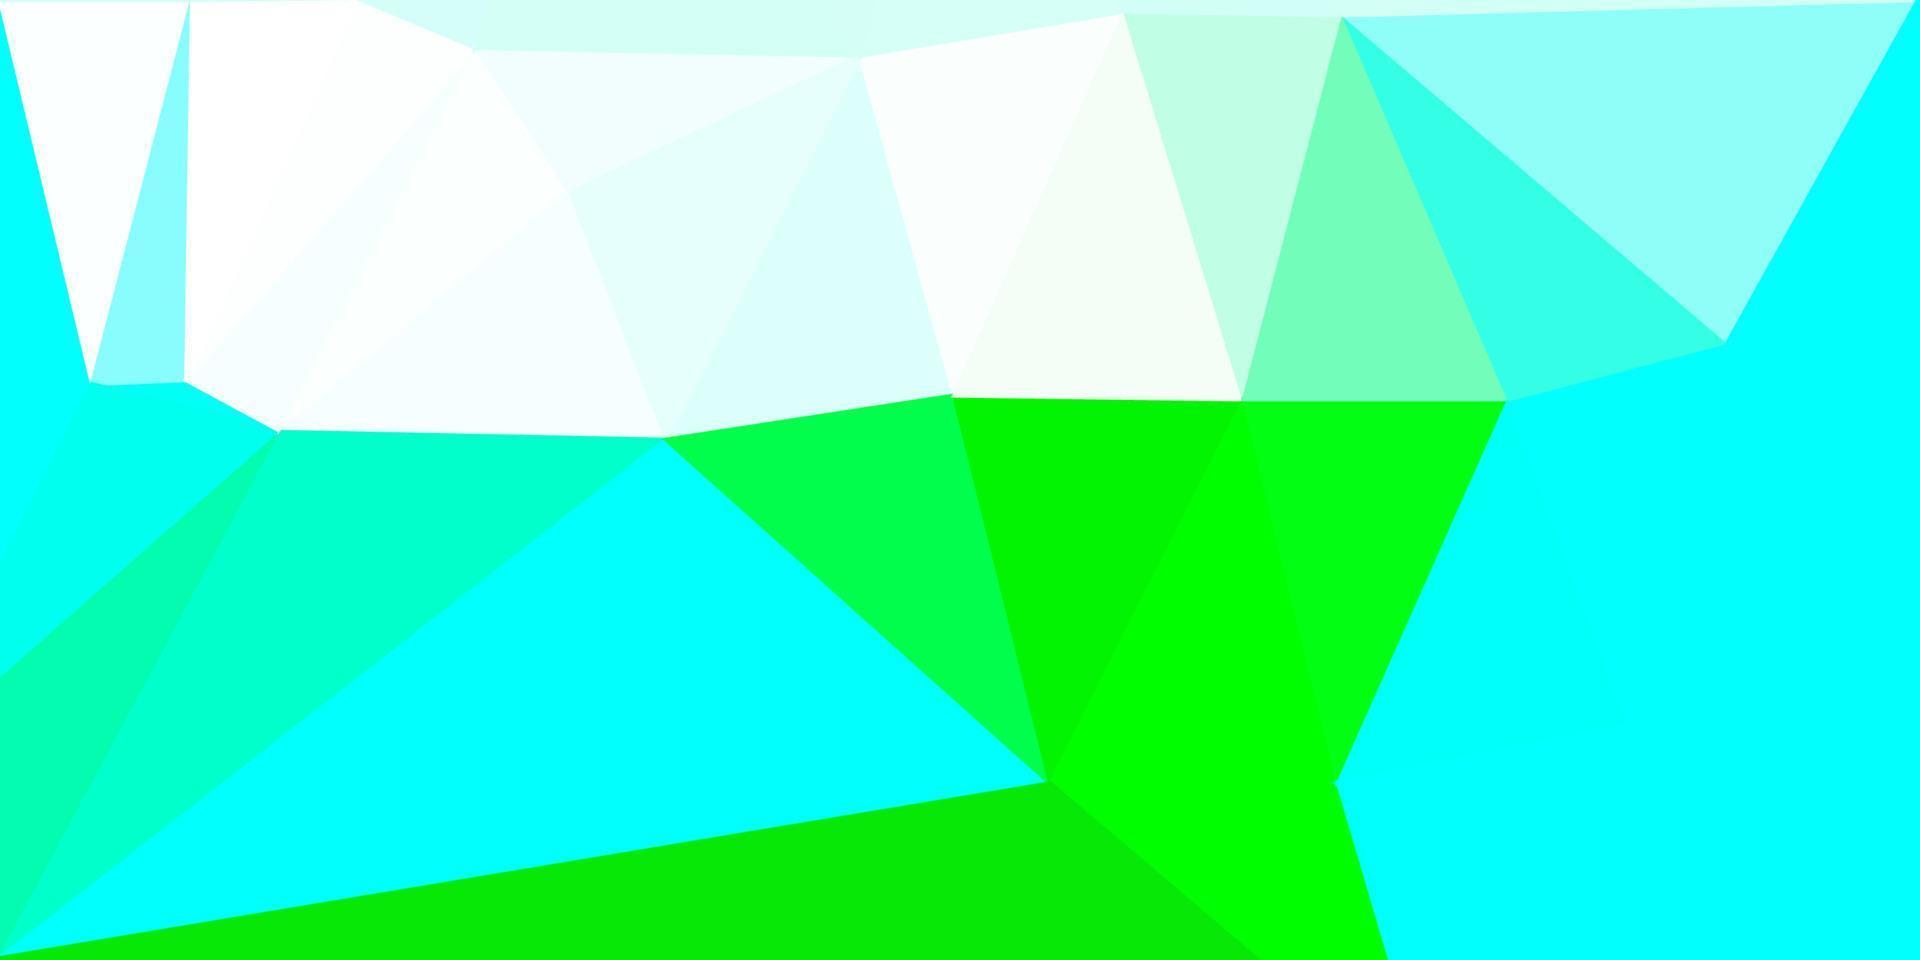 motif de mosaïque triangle vecteur bleu clair, vert.